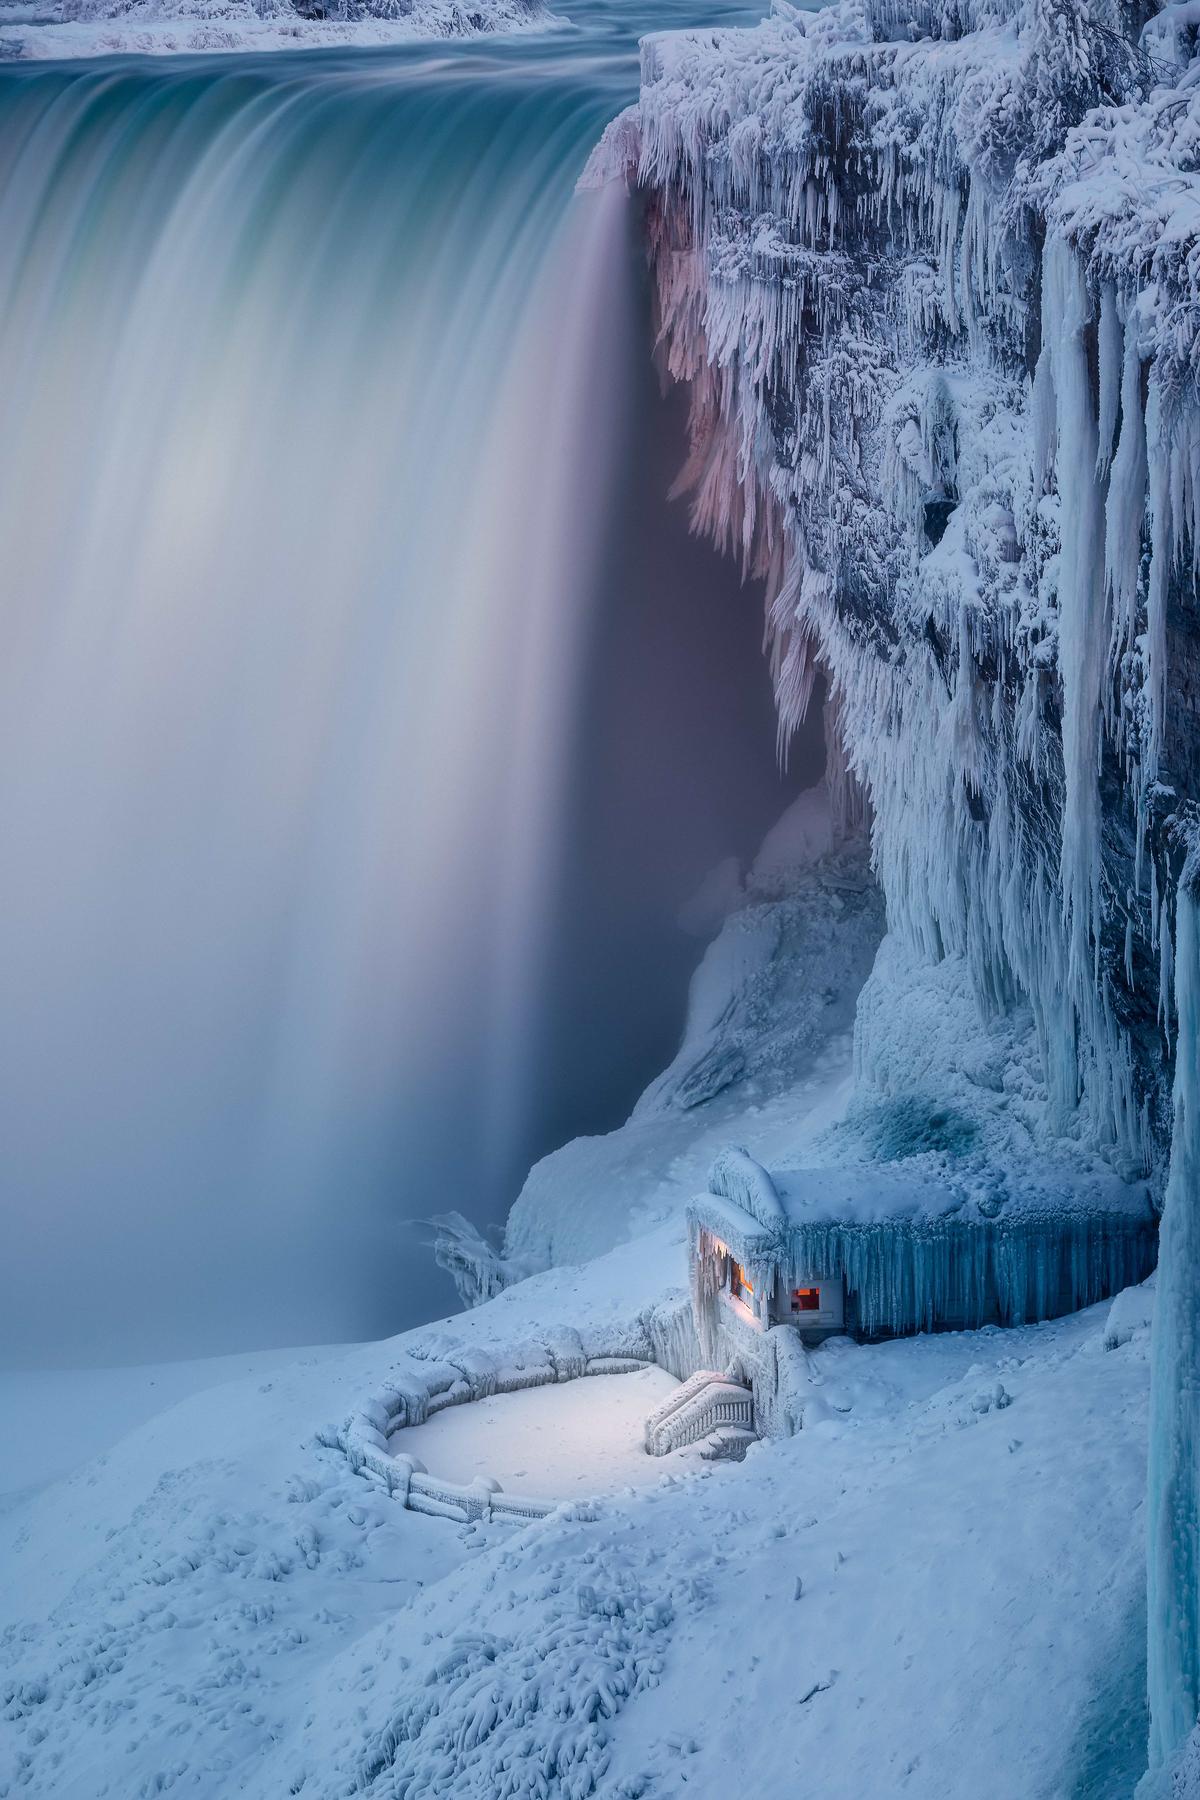 "Frozen" by Zhenhuan Zhou. (Courtesy of Zhenhuan Zhou/<a href="https://www.facebook.com/RMetSoc/">Royal Meteorological Society</a>)